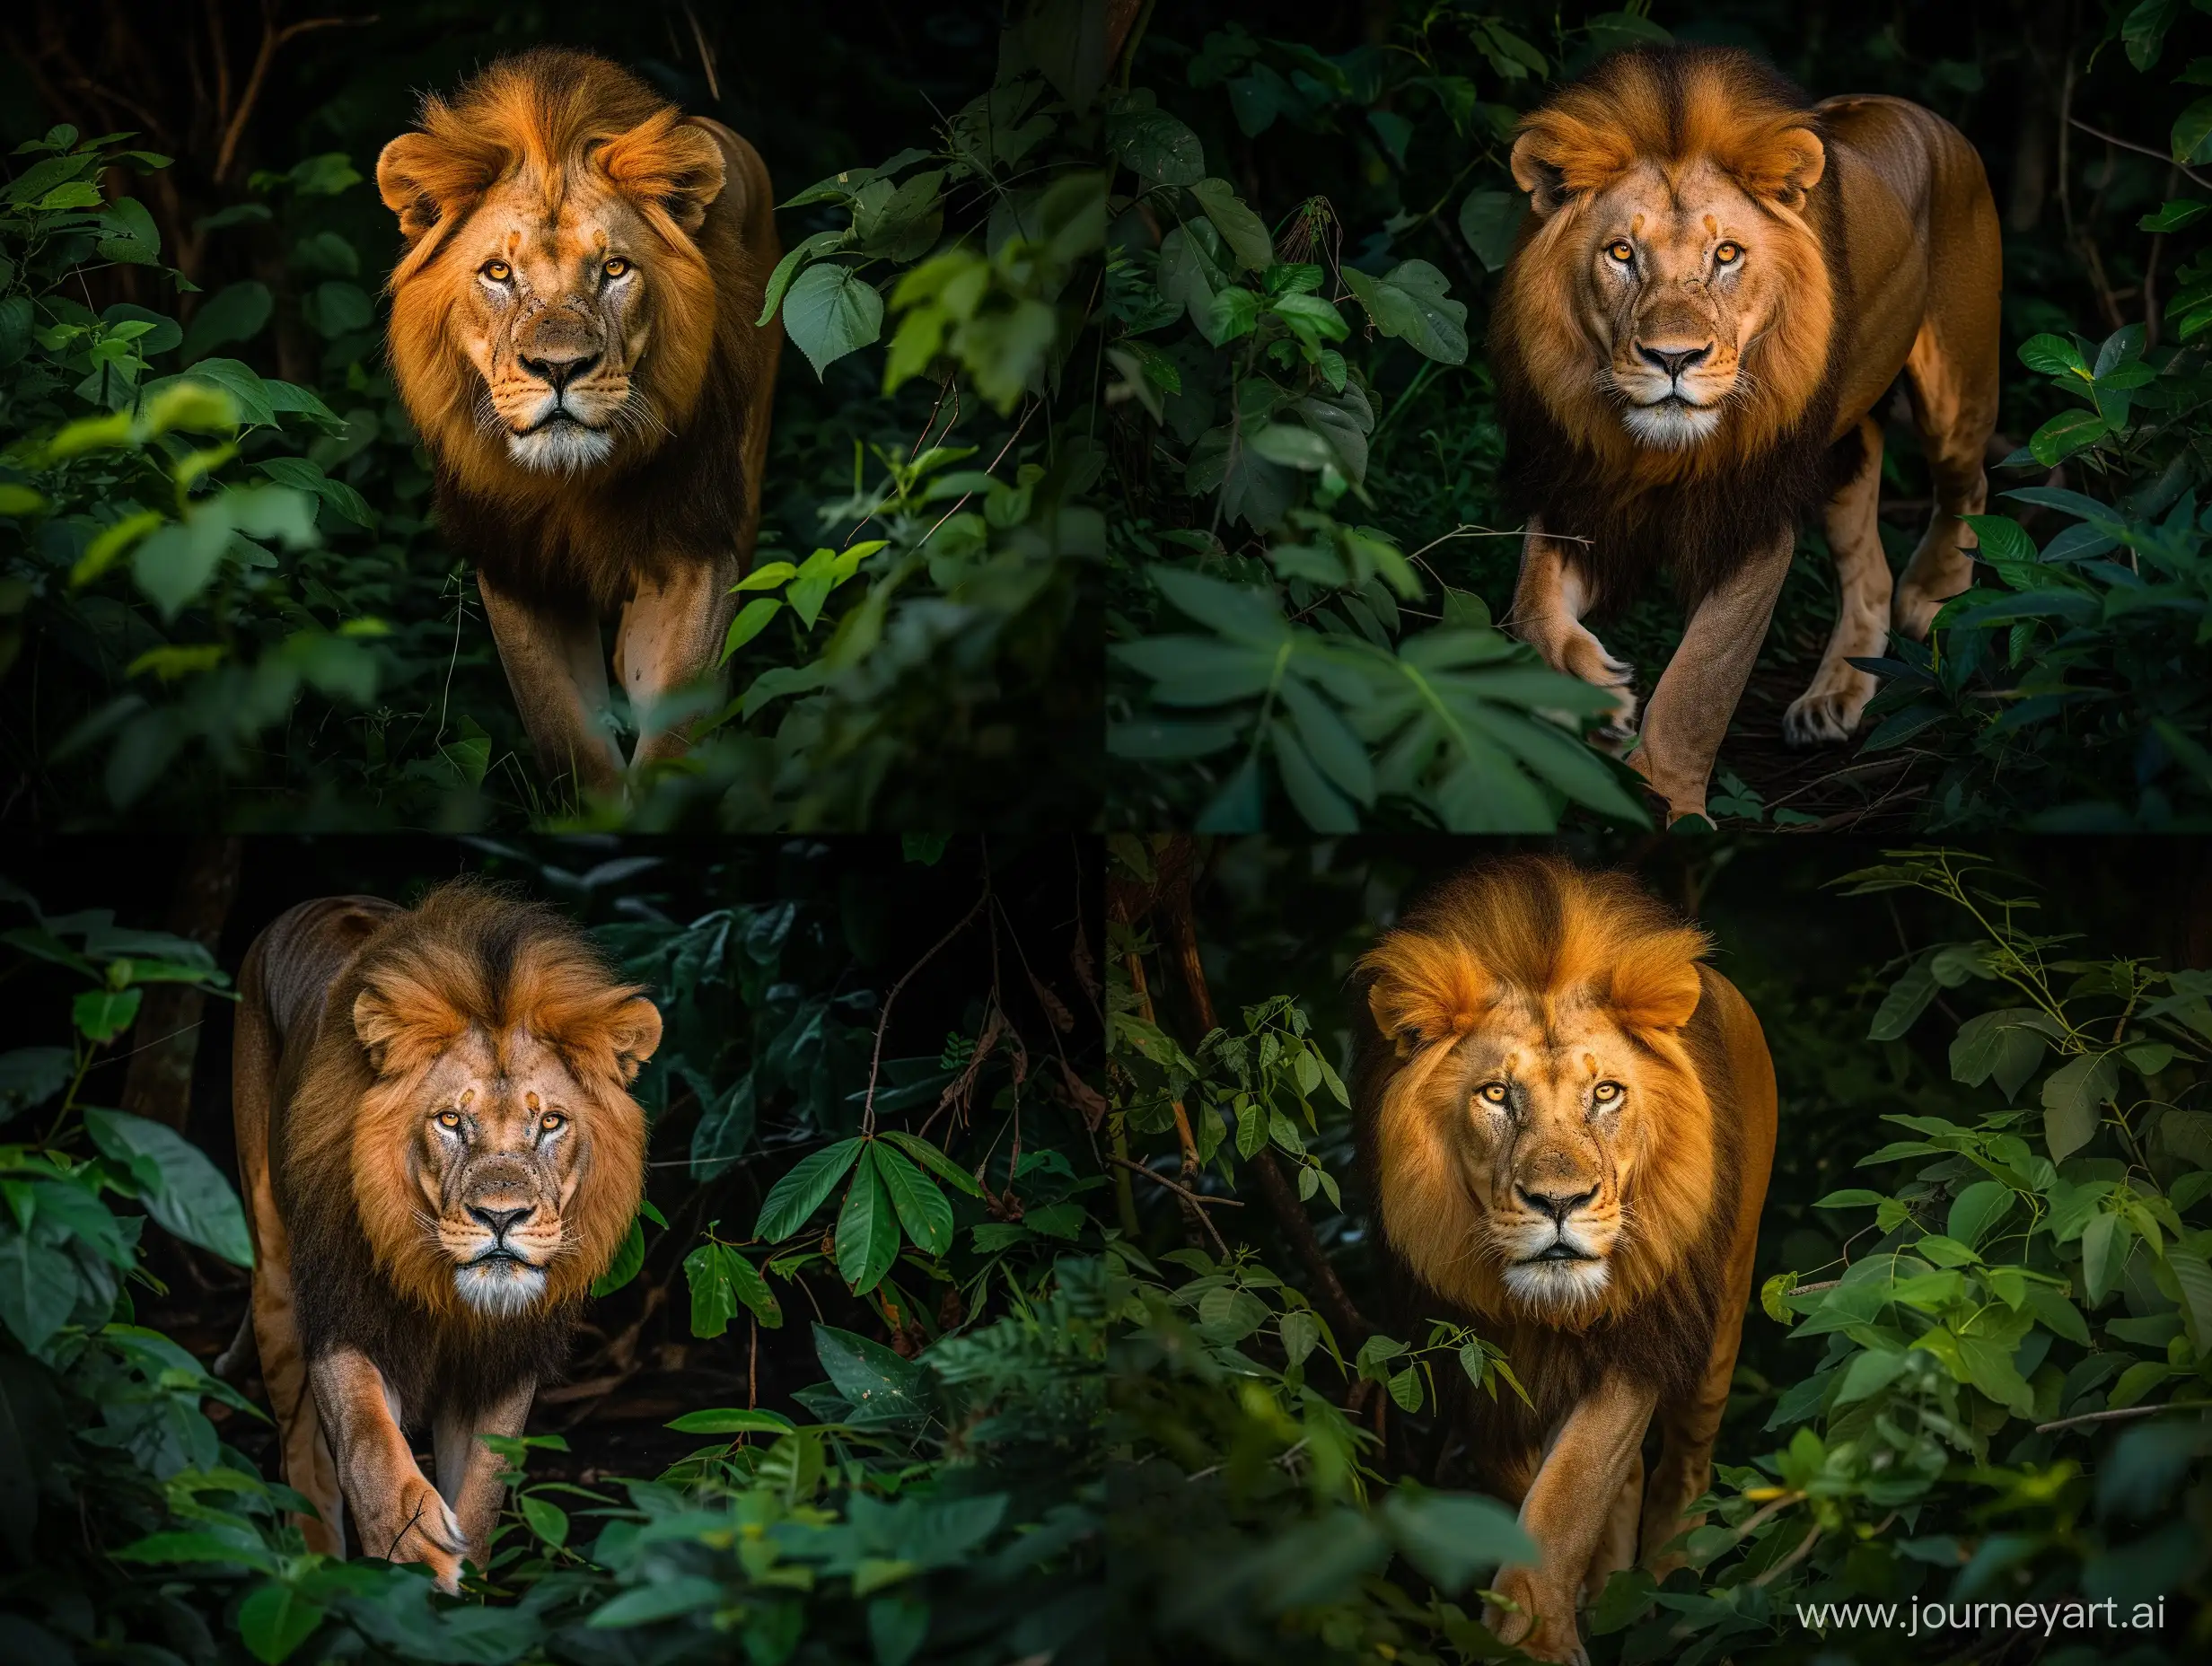 Majestic-Lion-Striding-Through-Sunlit-Forest-Captivating-Wildlife-Photography